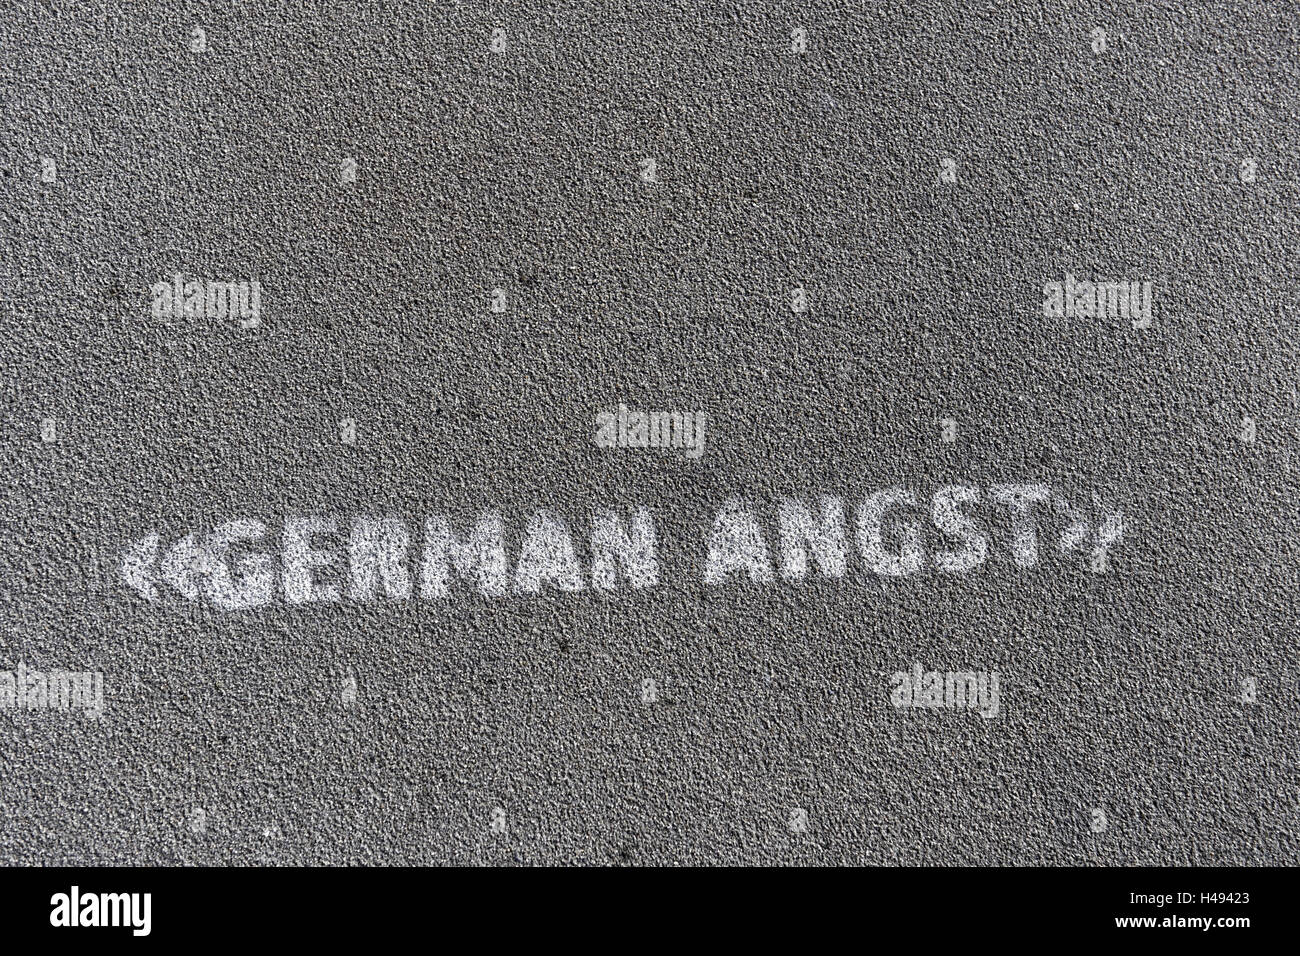 Writing 'German Angst' on a footpath, Hamburg, Germany, Stock Photo